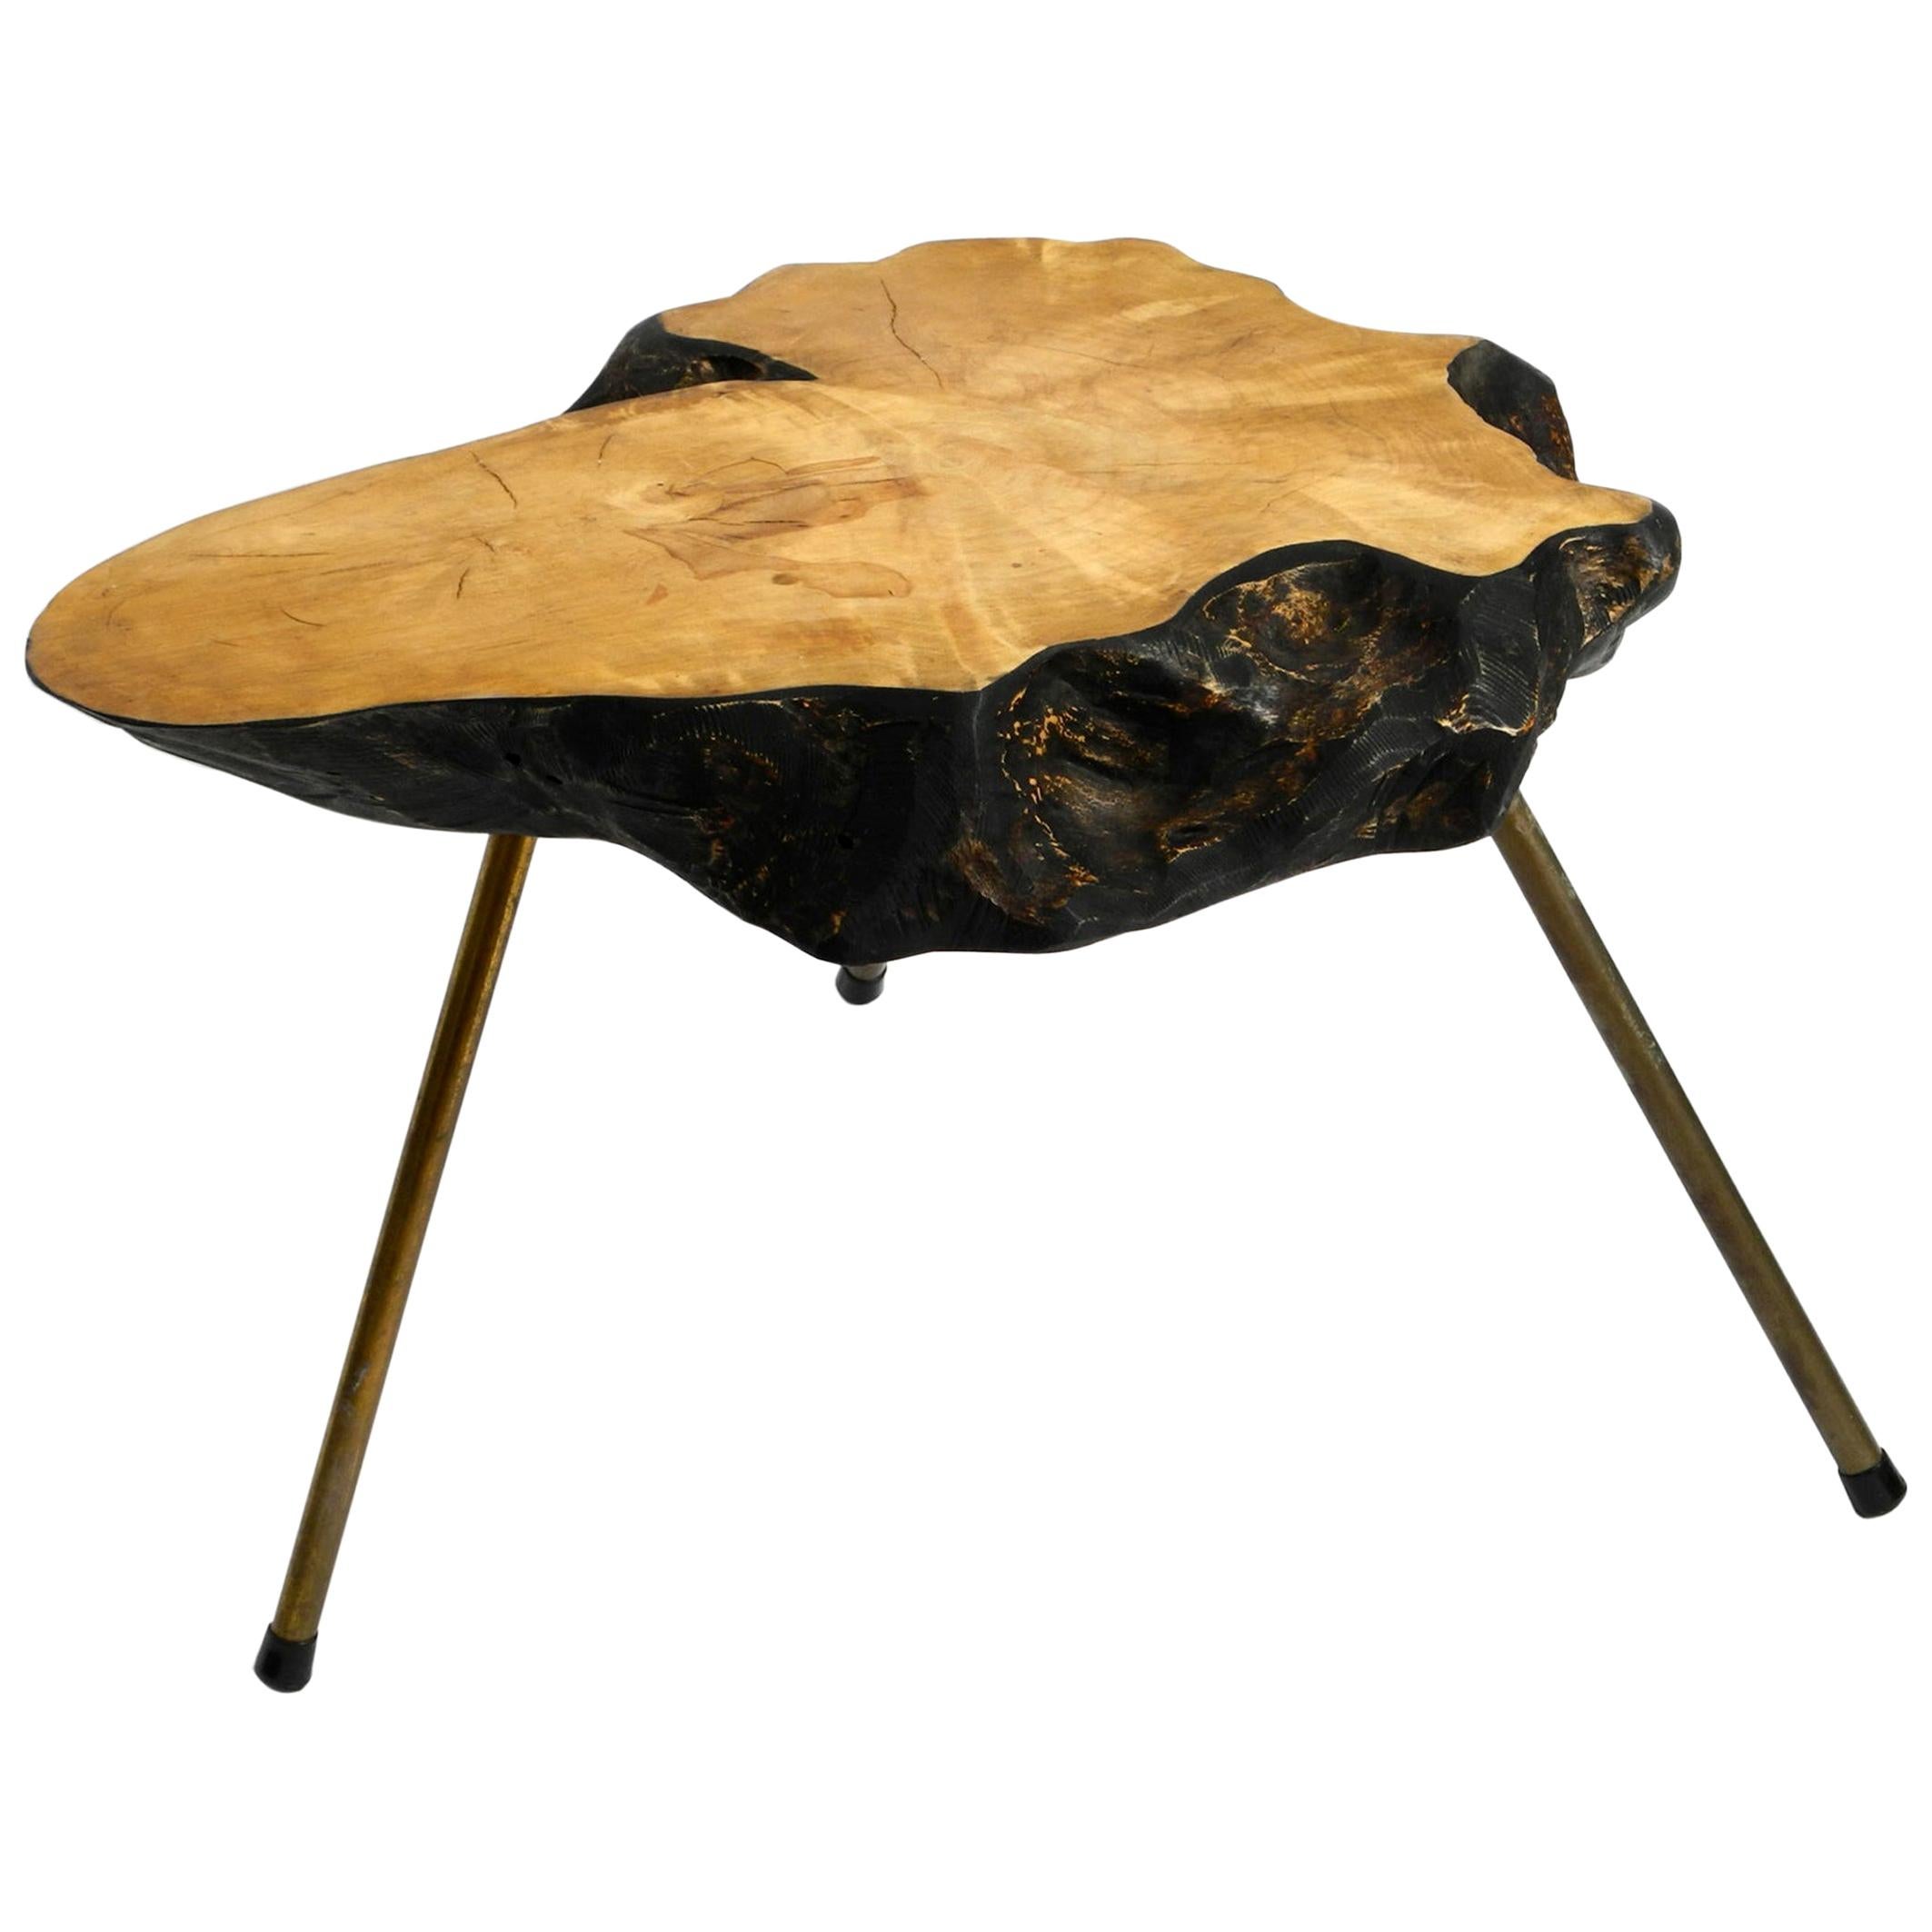 Rare, Beautiful Midcentury Three-Legged Coffee Table Made of Thick Tree Slice